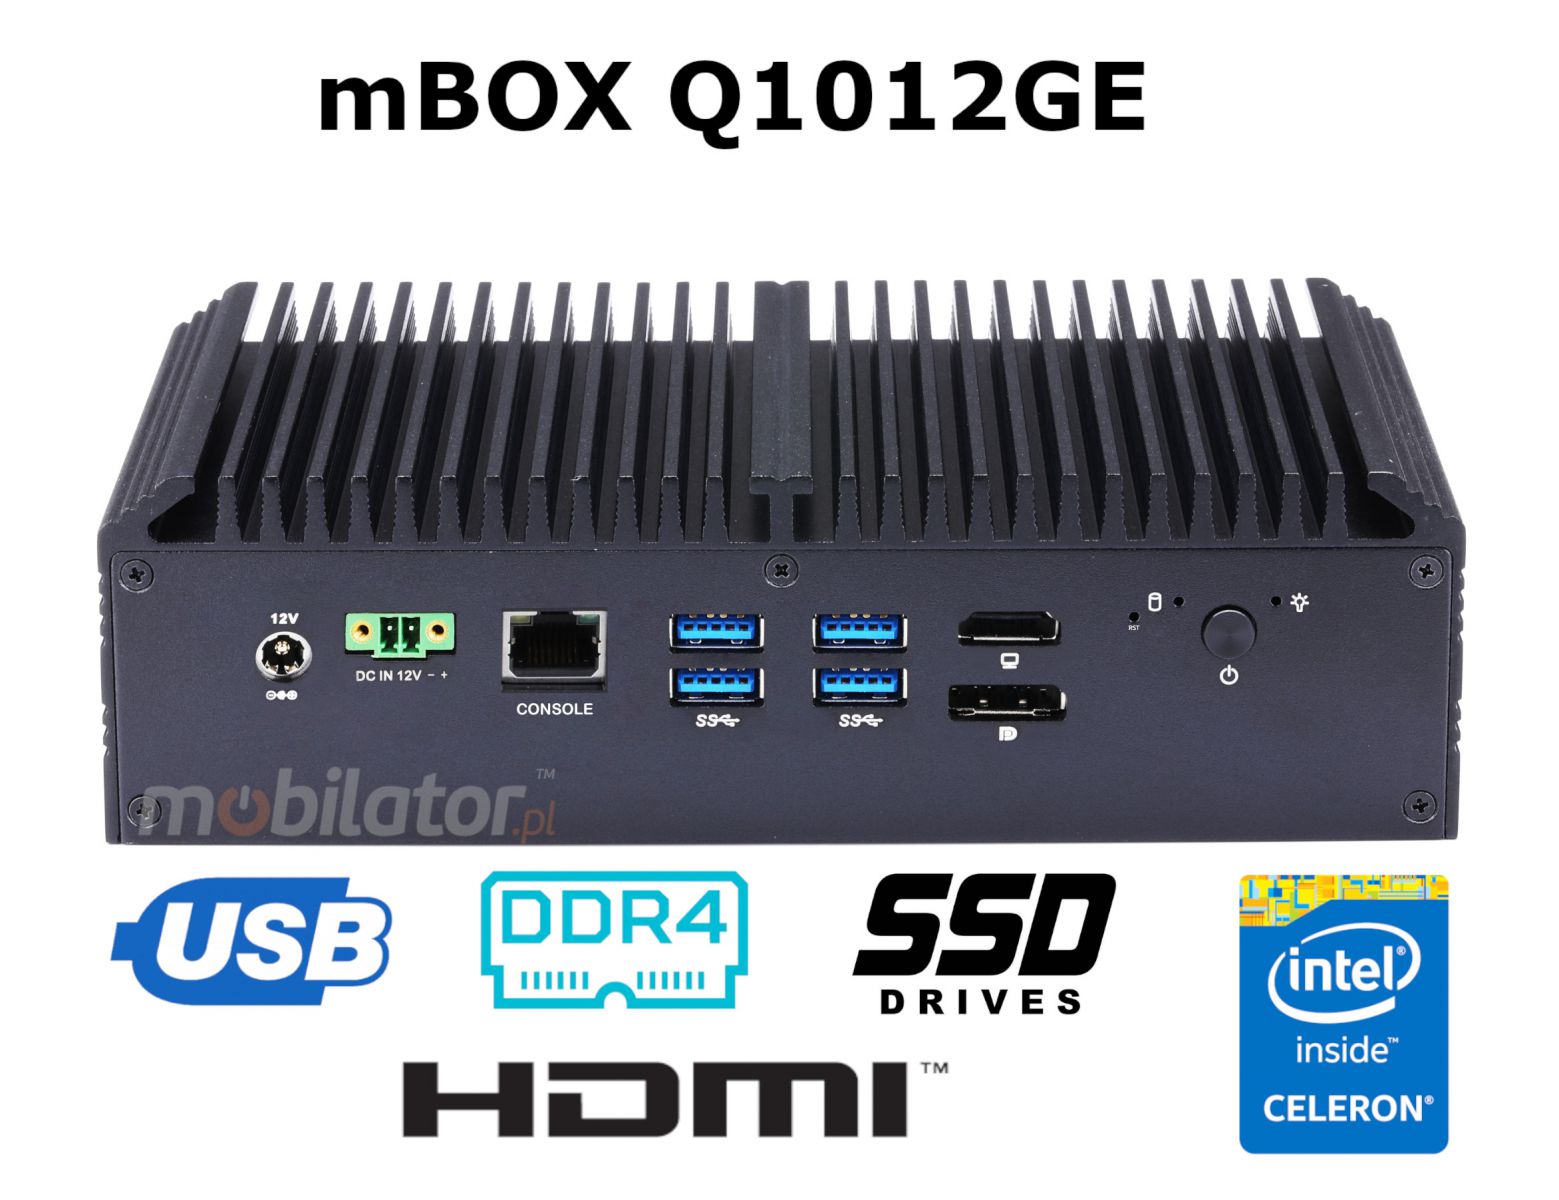 mBOX Q1012GE wersja 1, HDMI, intel Celeron